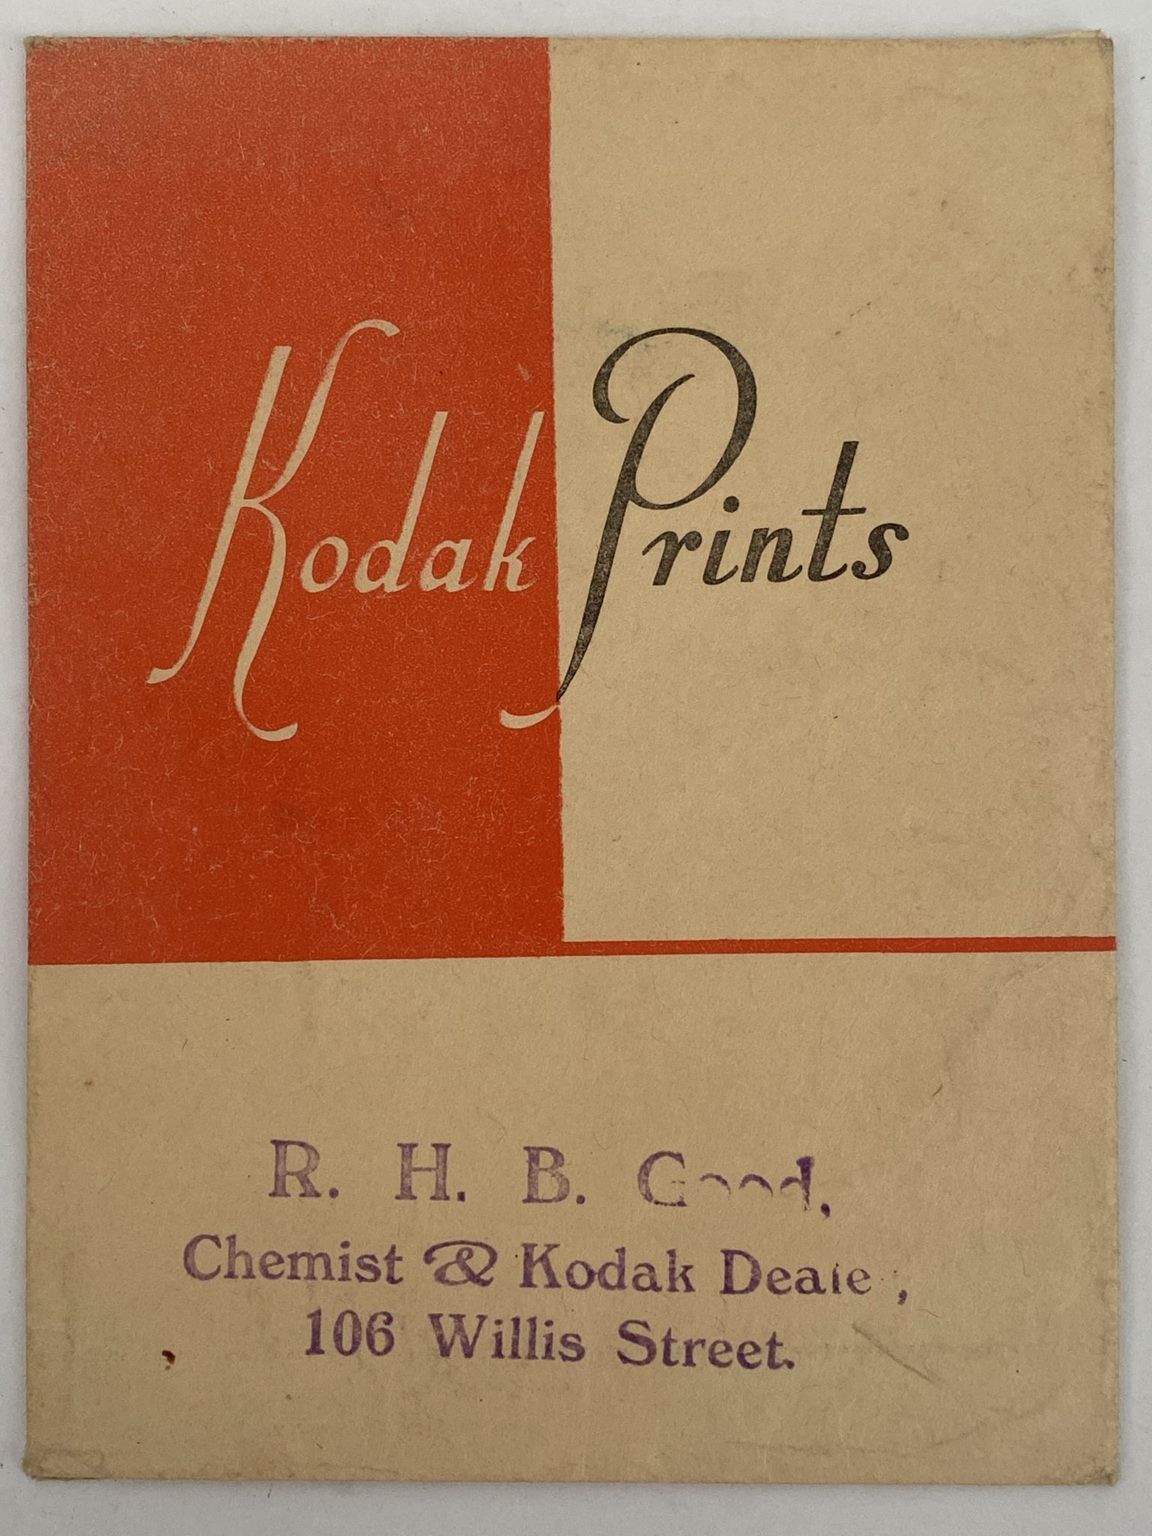 OLD PHOTO / NEGATIVE WALLET: Kodak Prints, R.H.B. Good Chemist 1940s